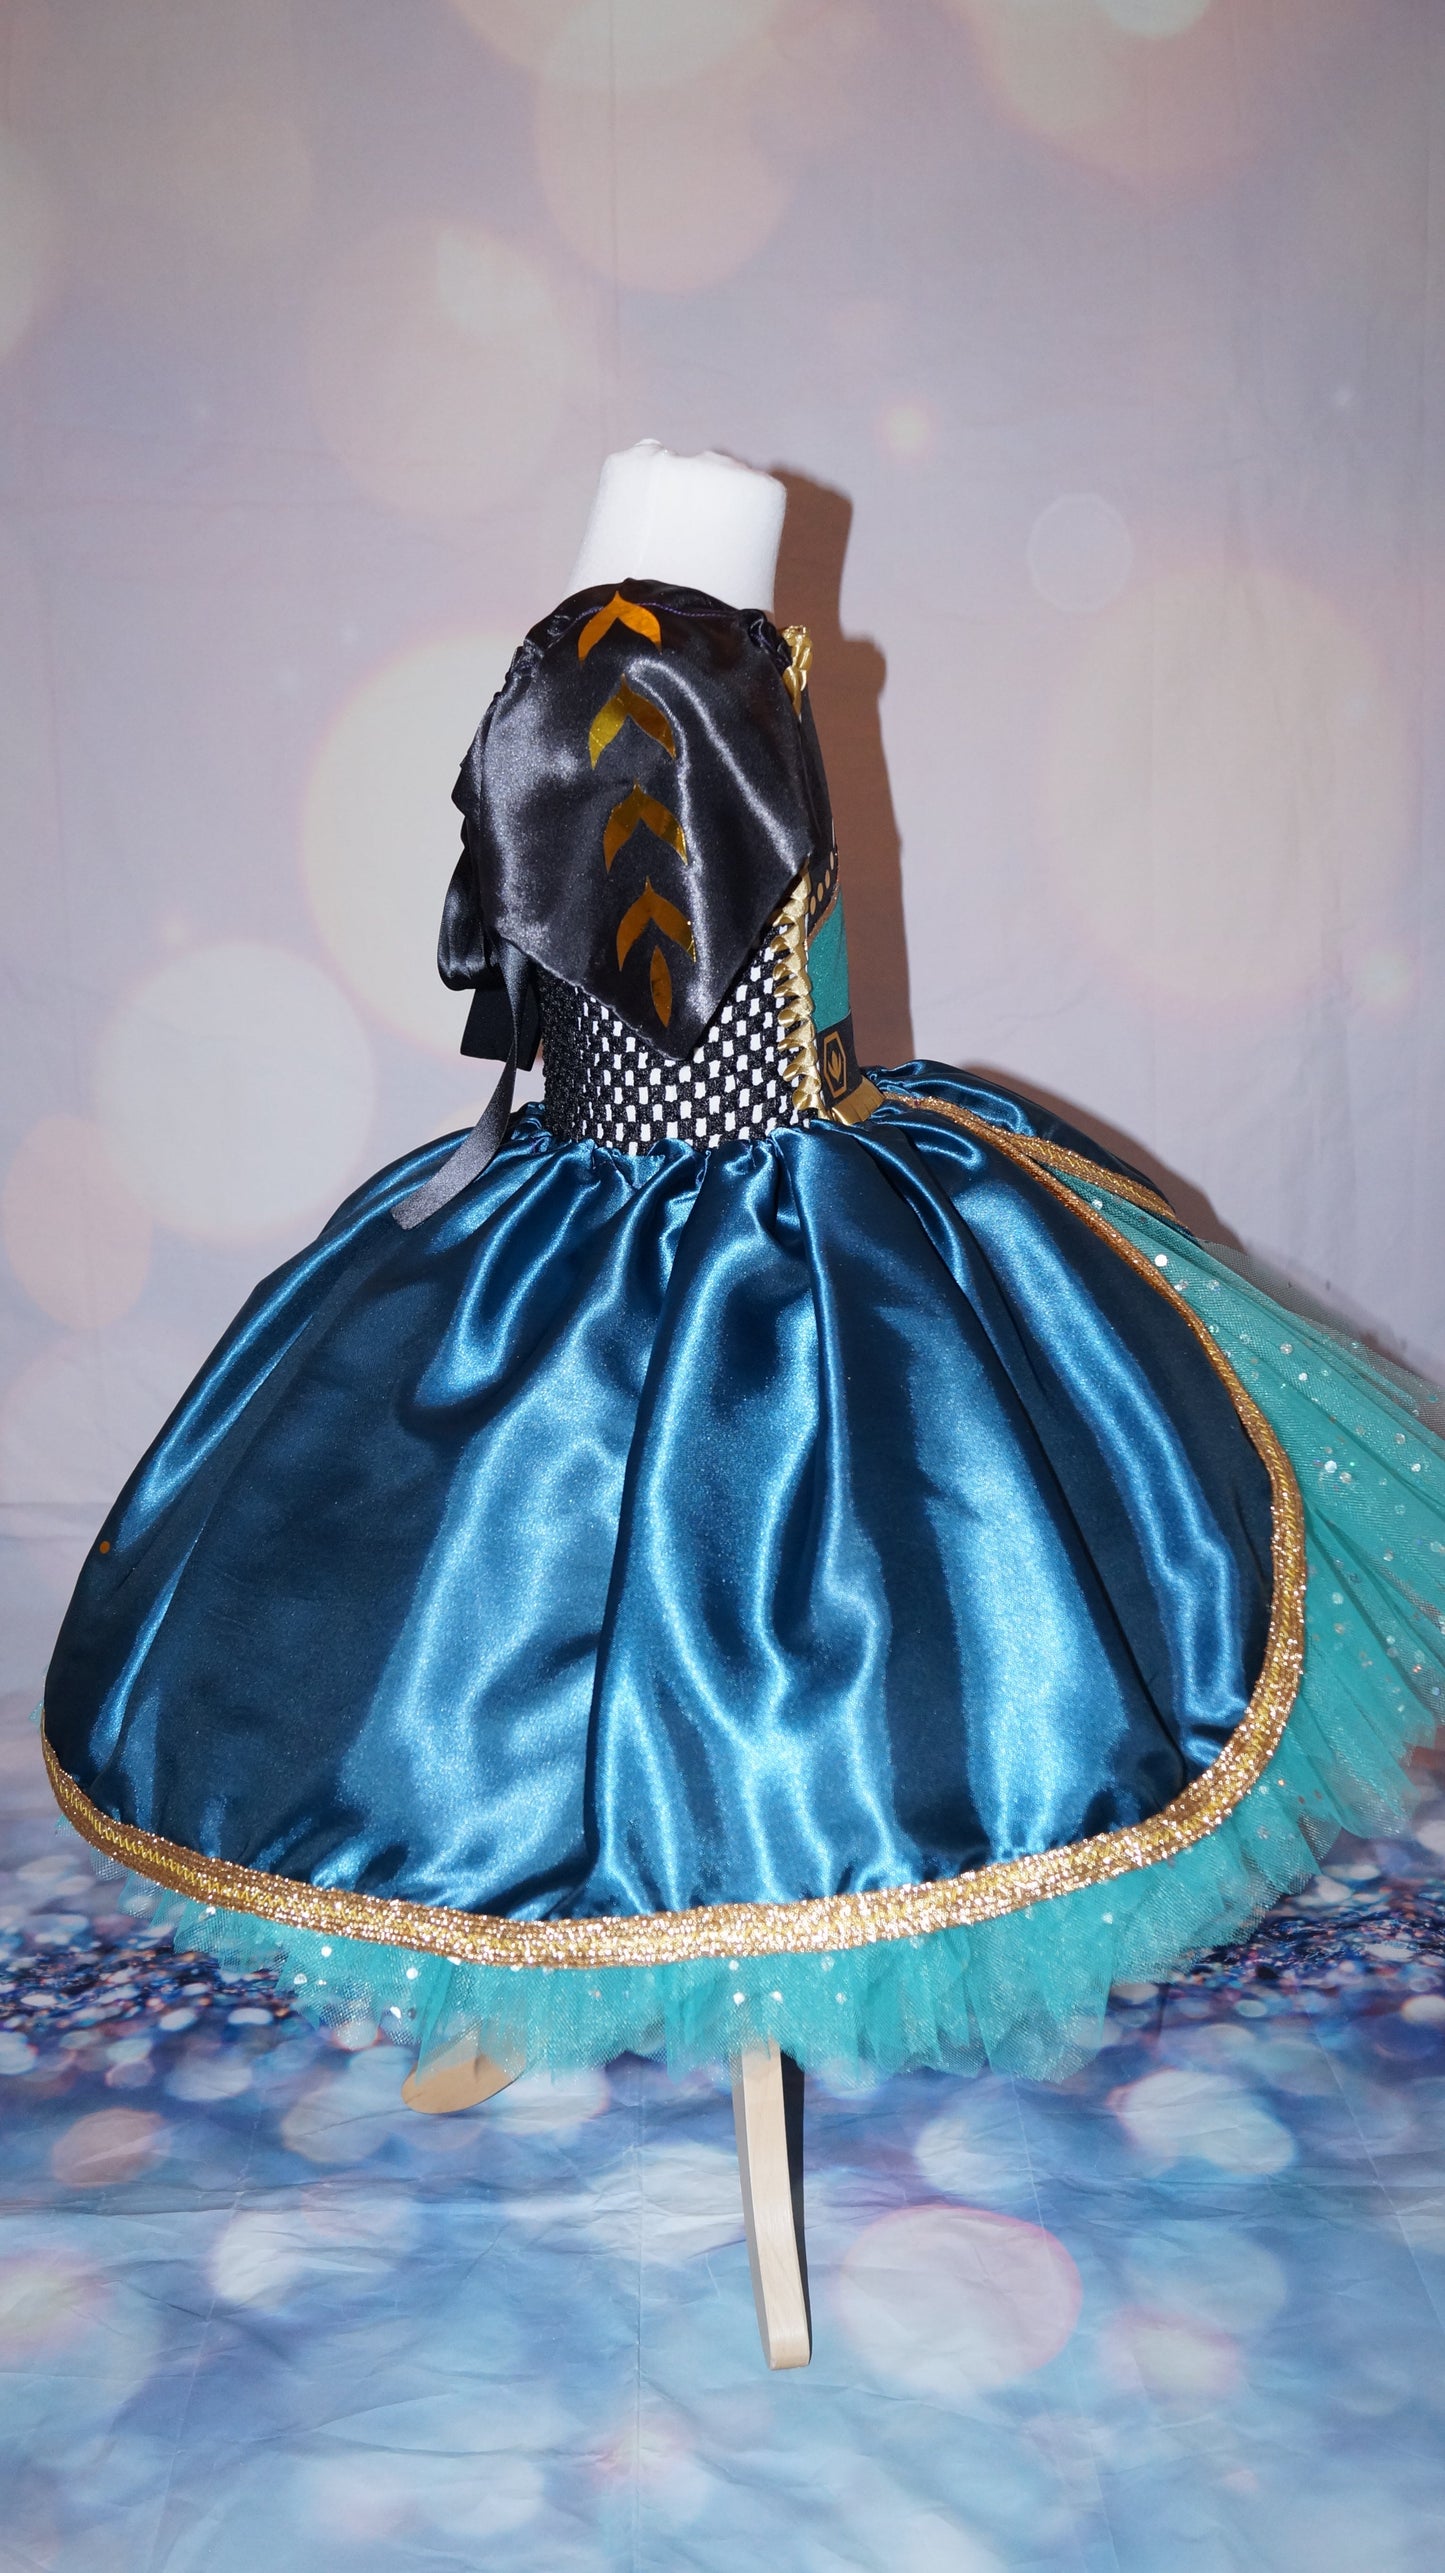 Disney Princess Anna Coronation Dress Frozen 2 Inspired Tutu Dress